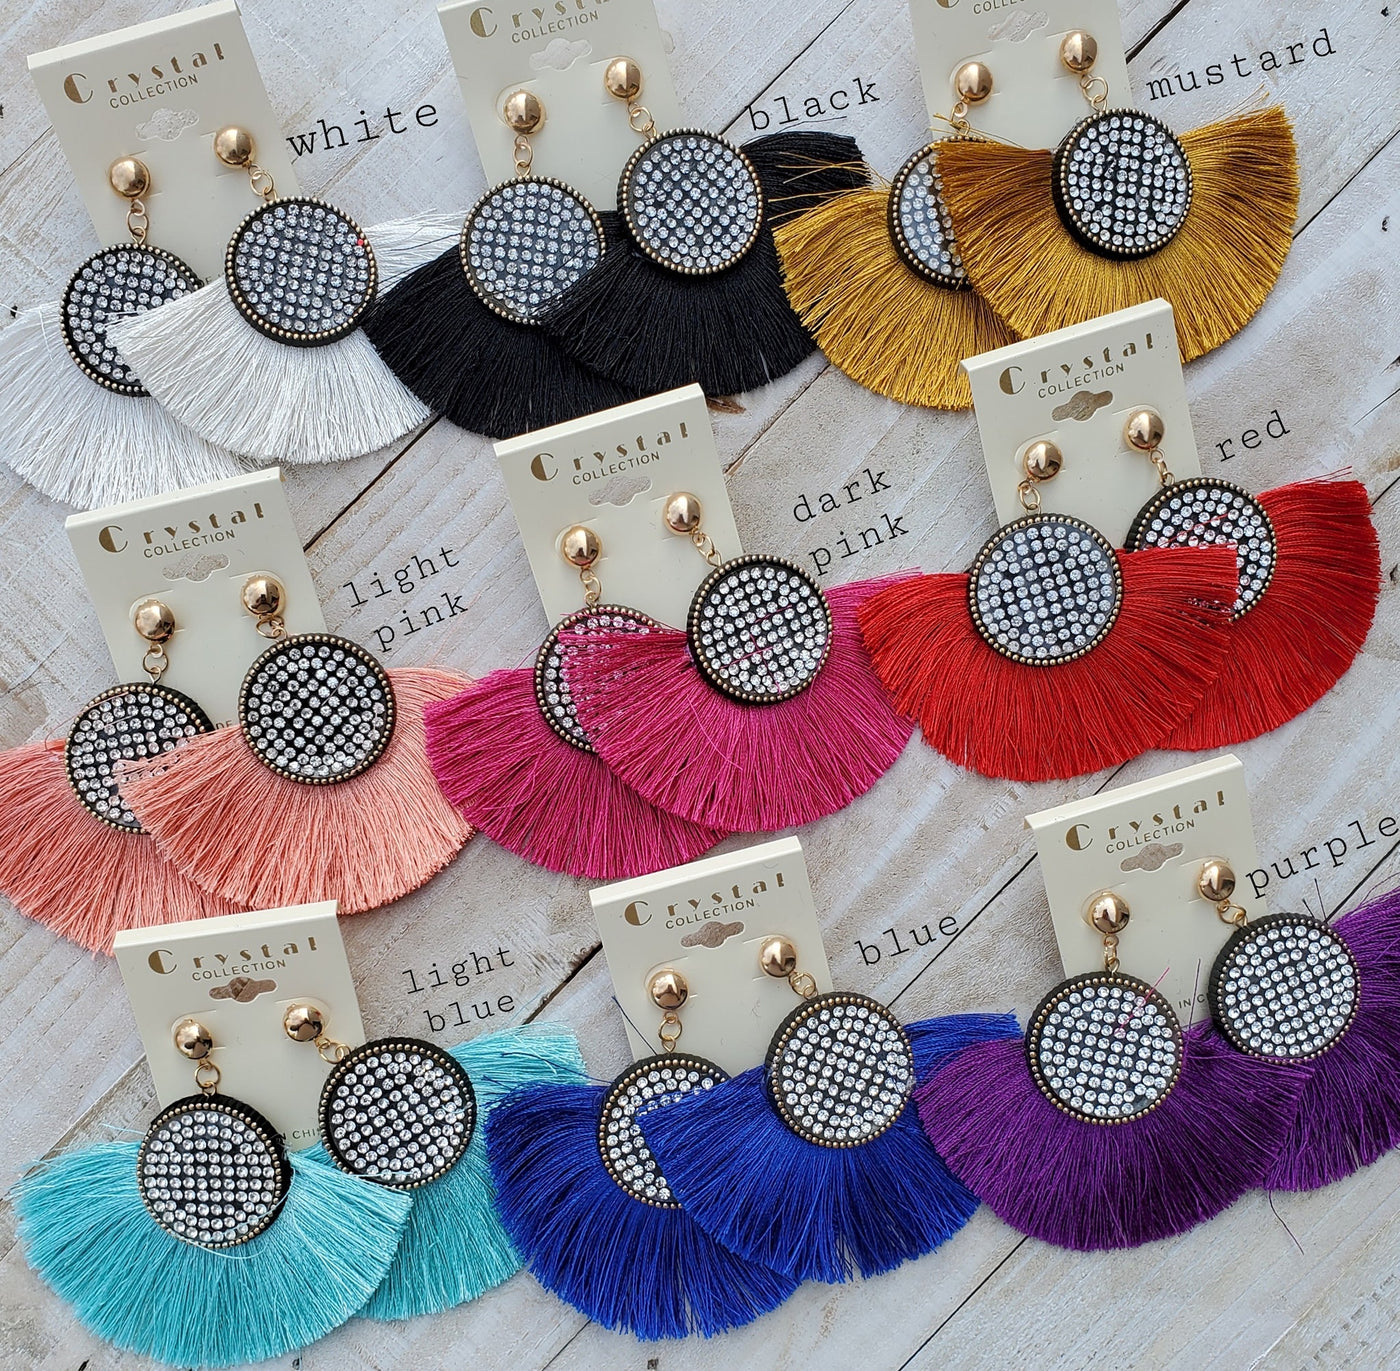 Peacock Tassel Earrings